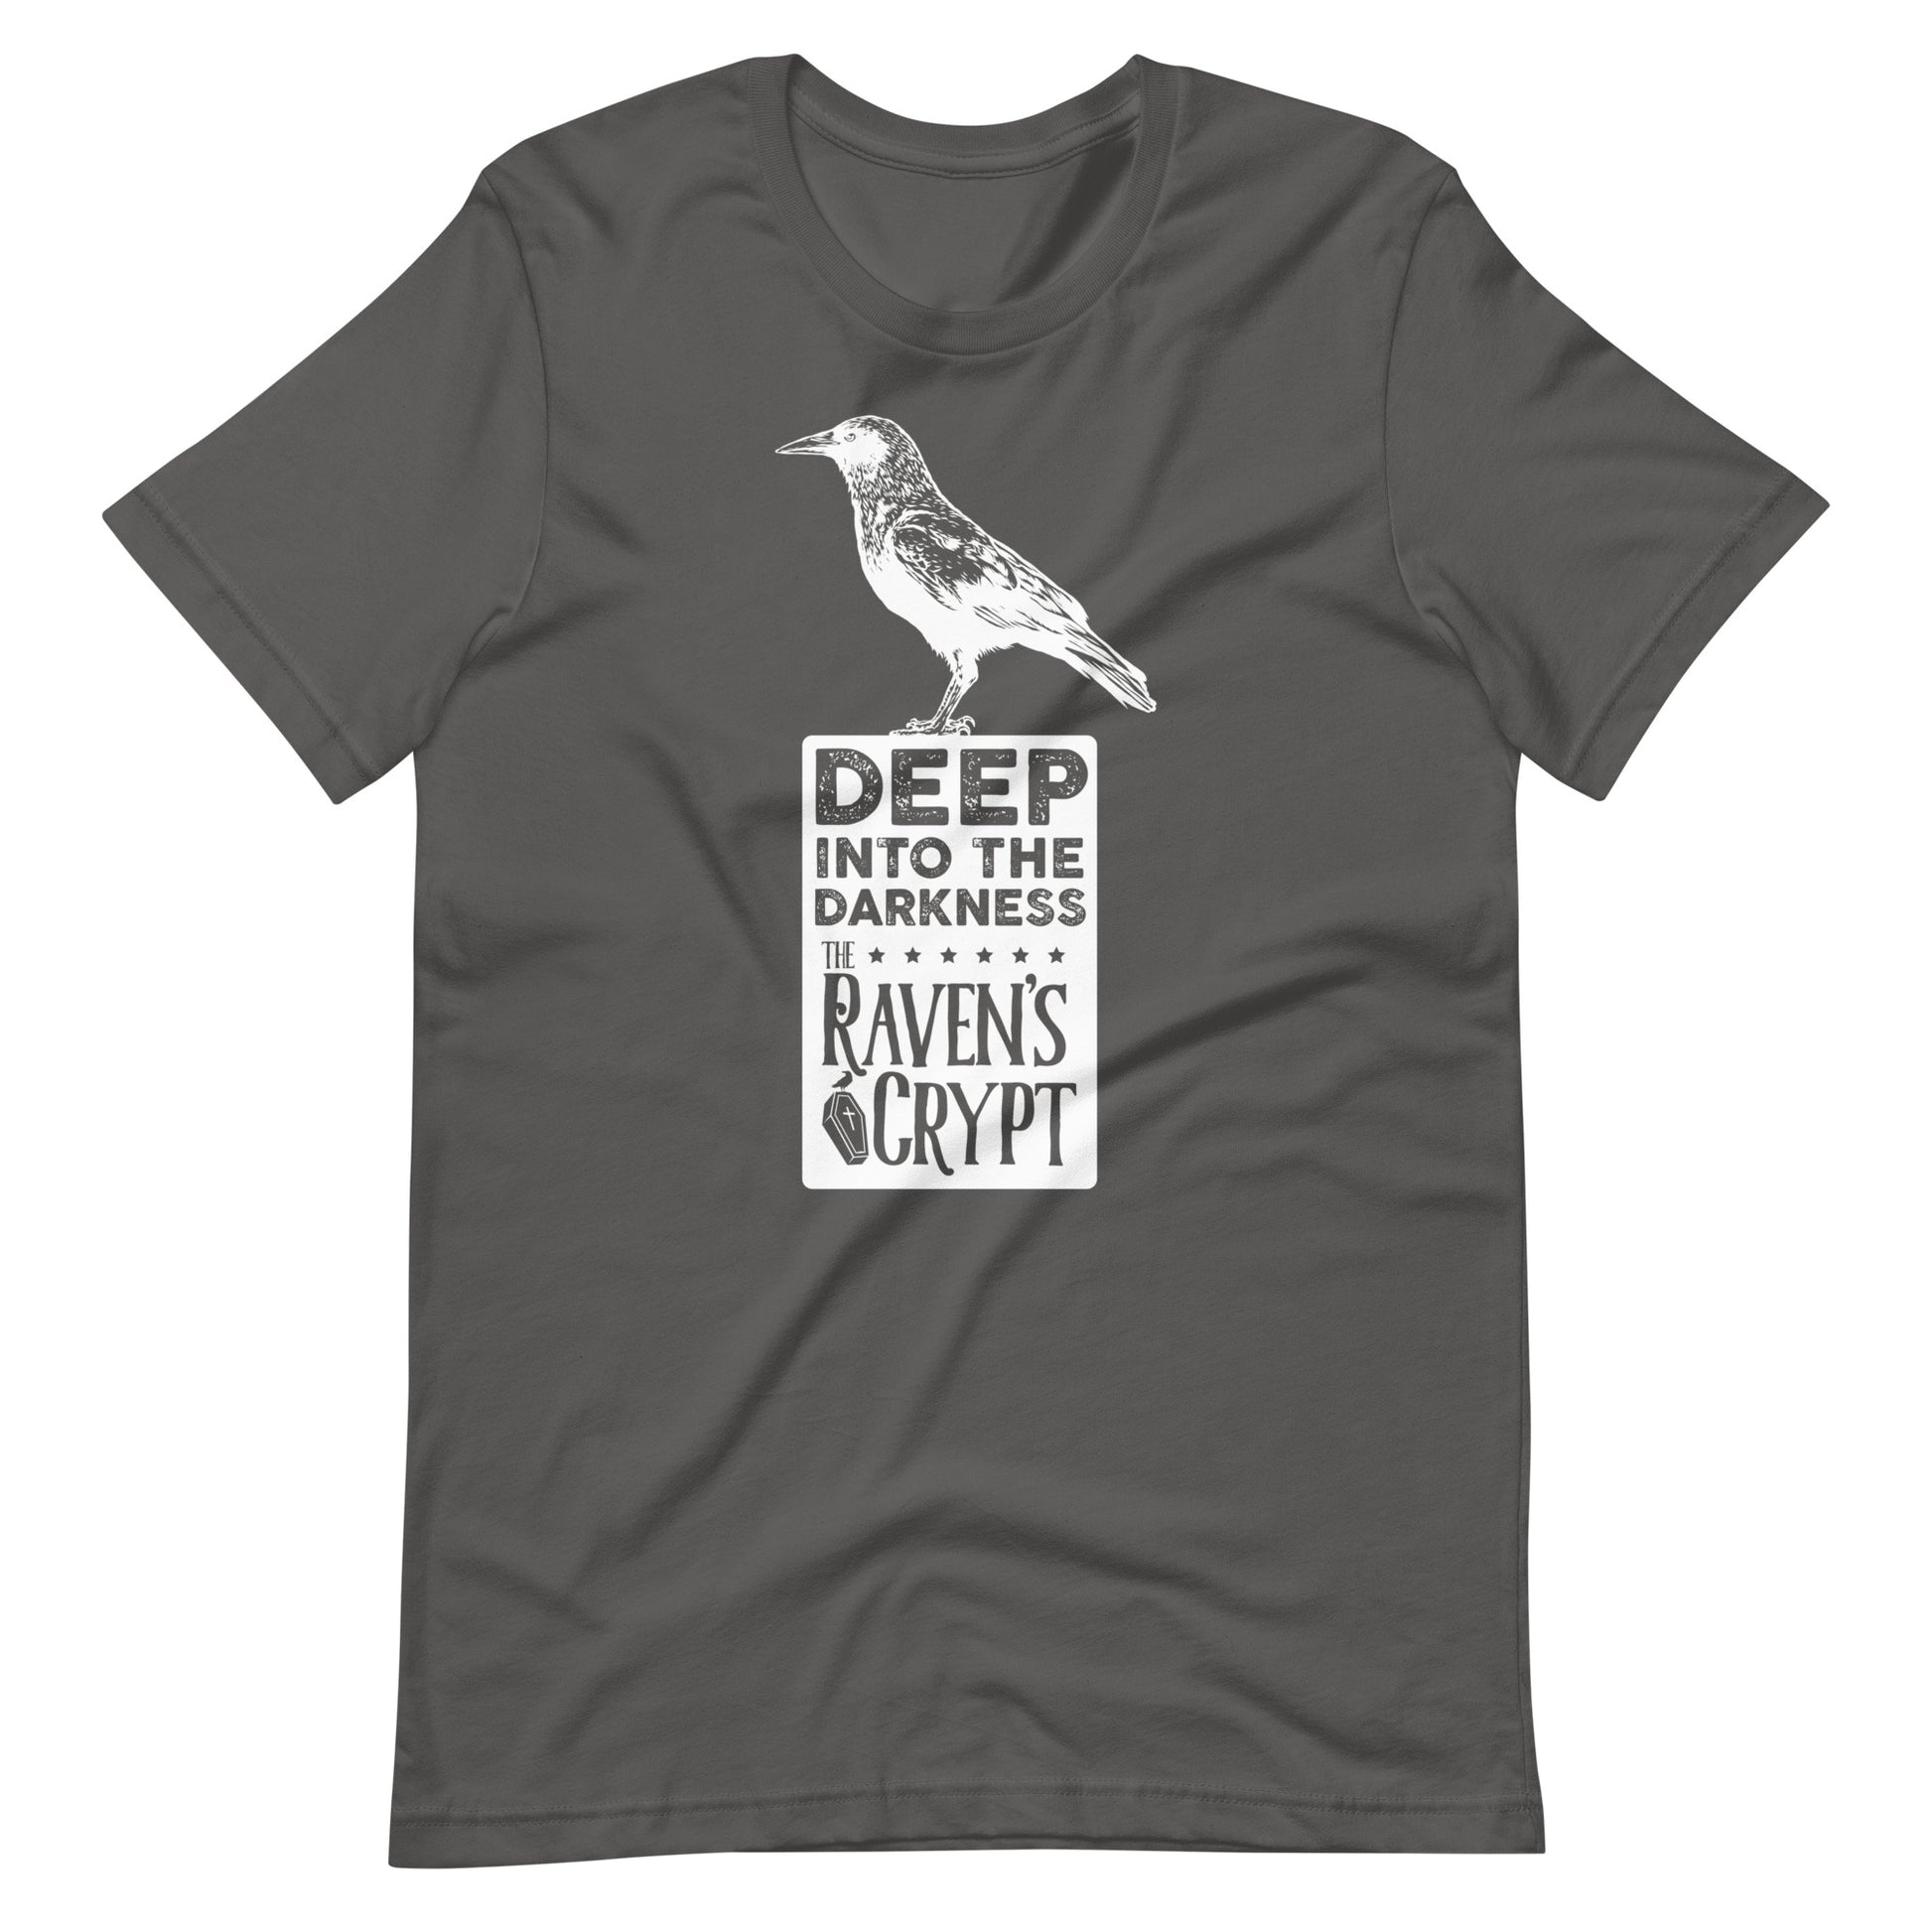 Deep Into the Darkness Crypt 2 - Men's t-shirt - Asphalt Front